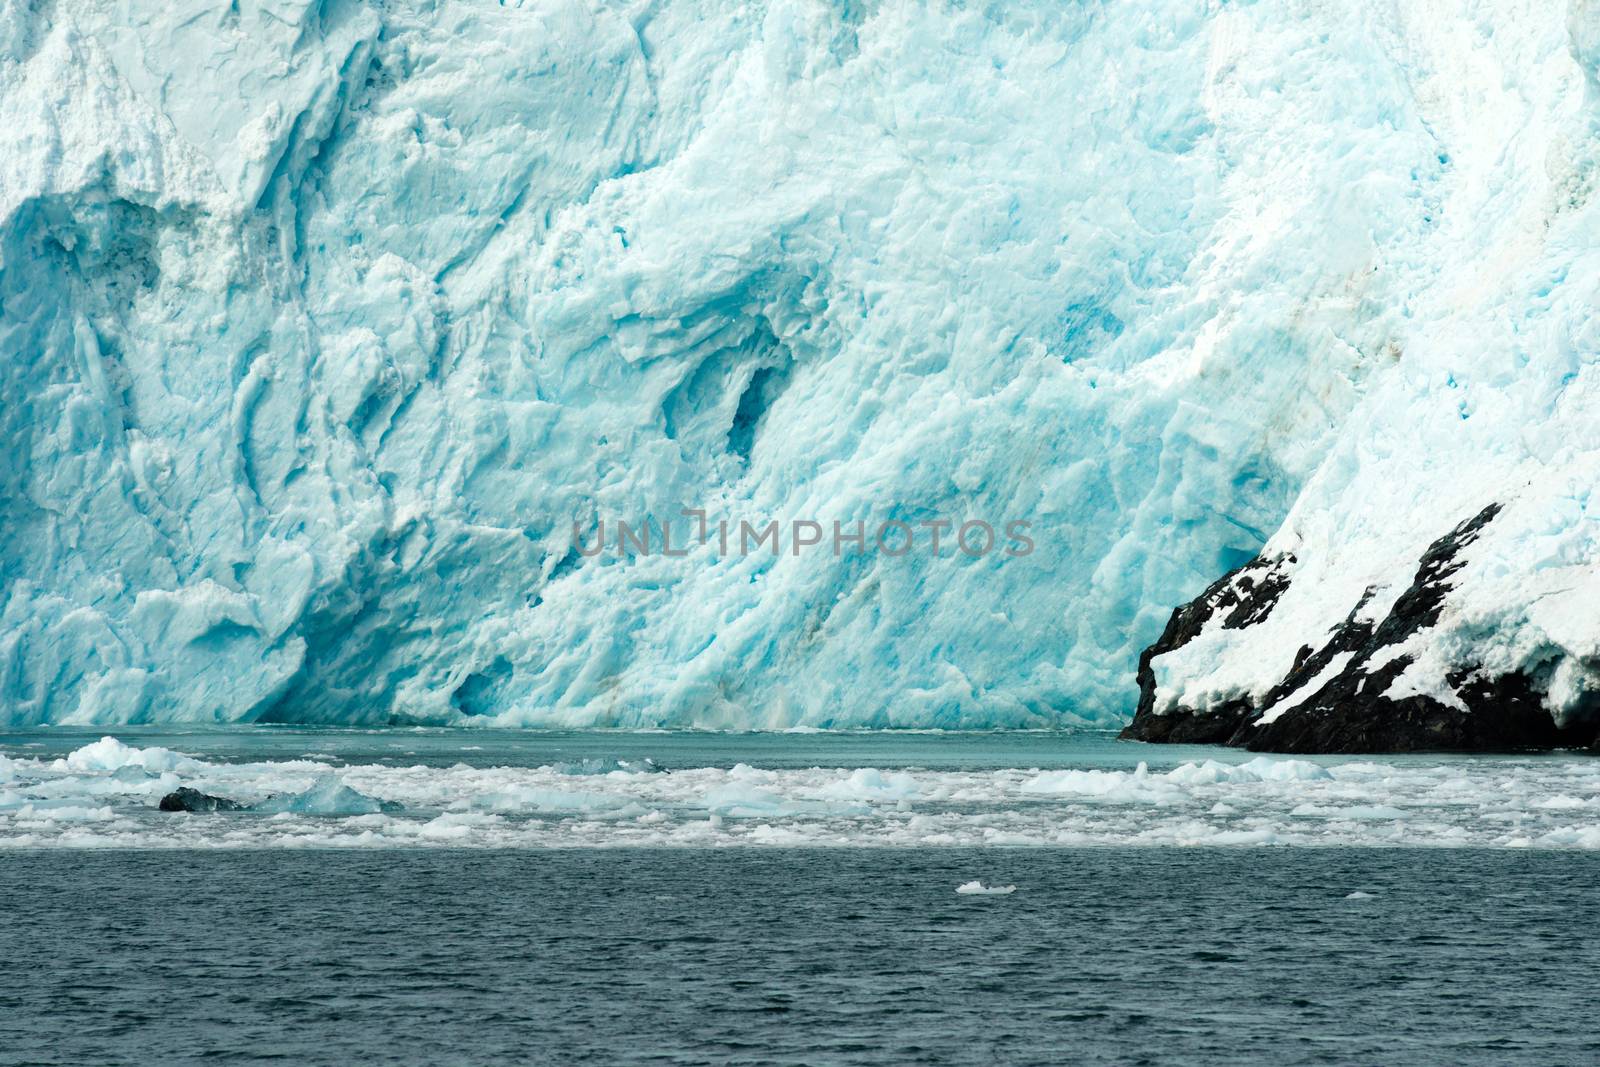 Aialik Glacier Ice Flow Pacific Ocean Alaska Coast by ChrisBoswell